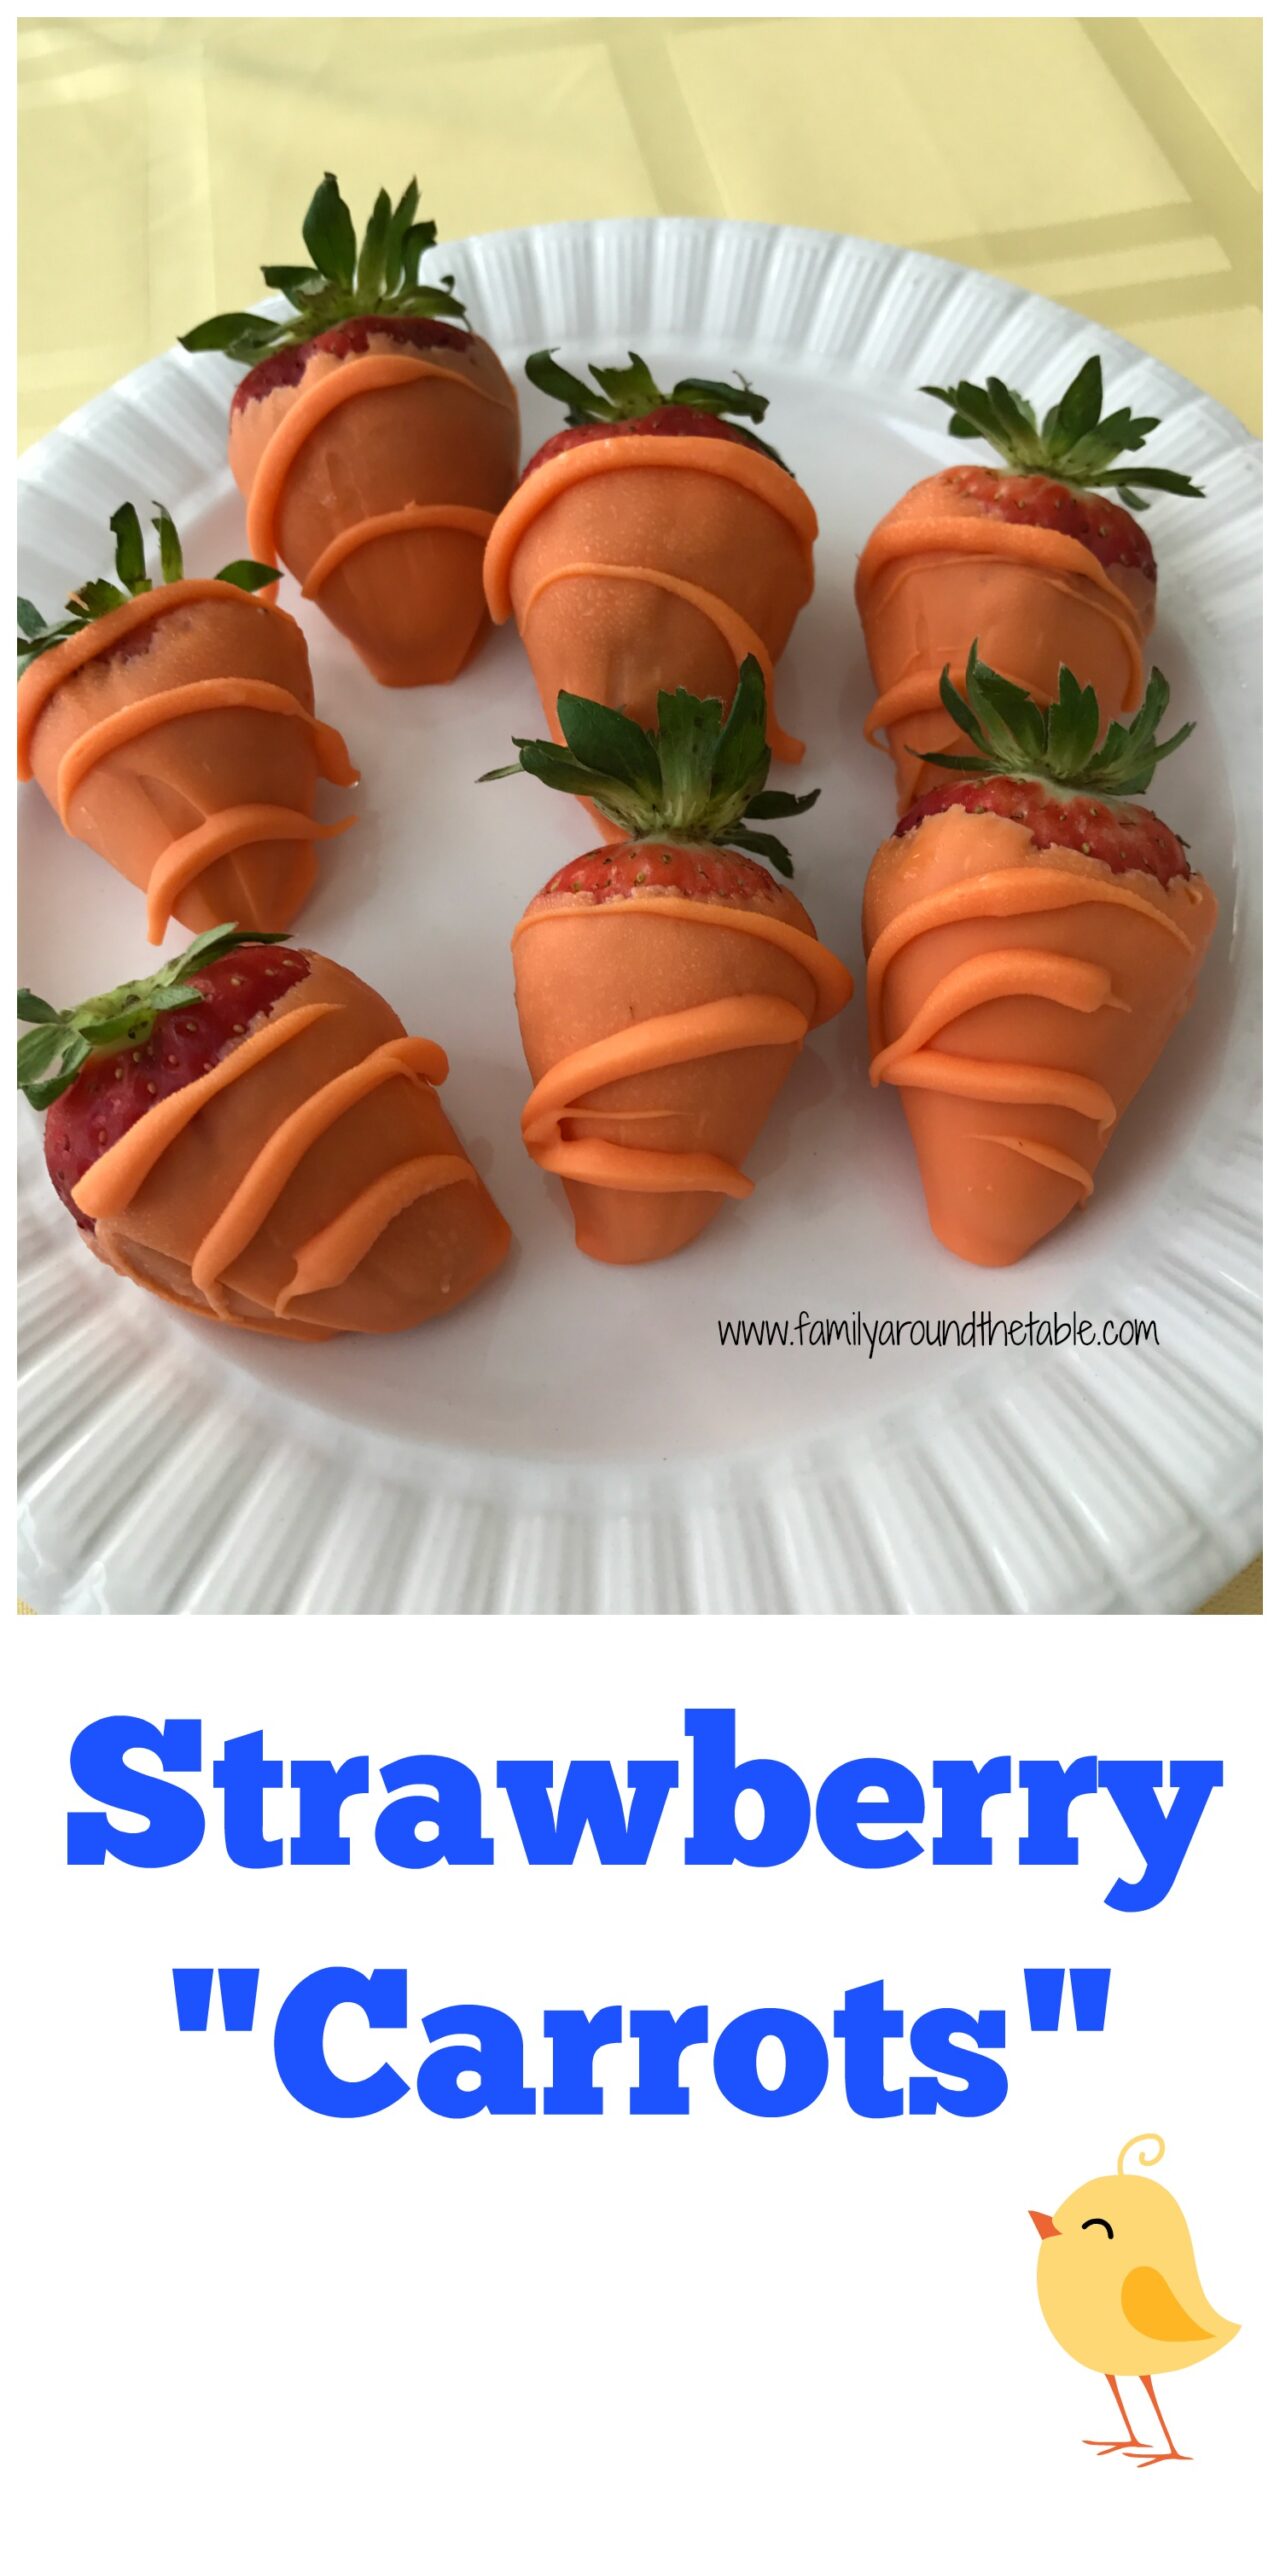 Strawberry "carrots" Pinterest Image